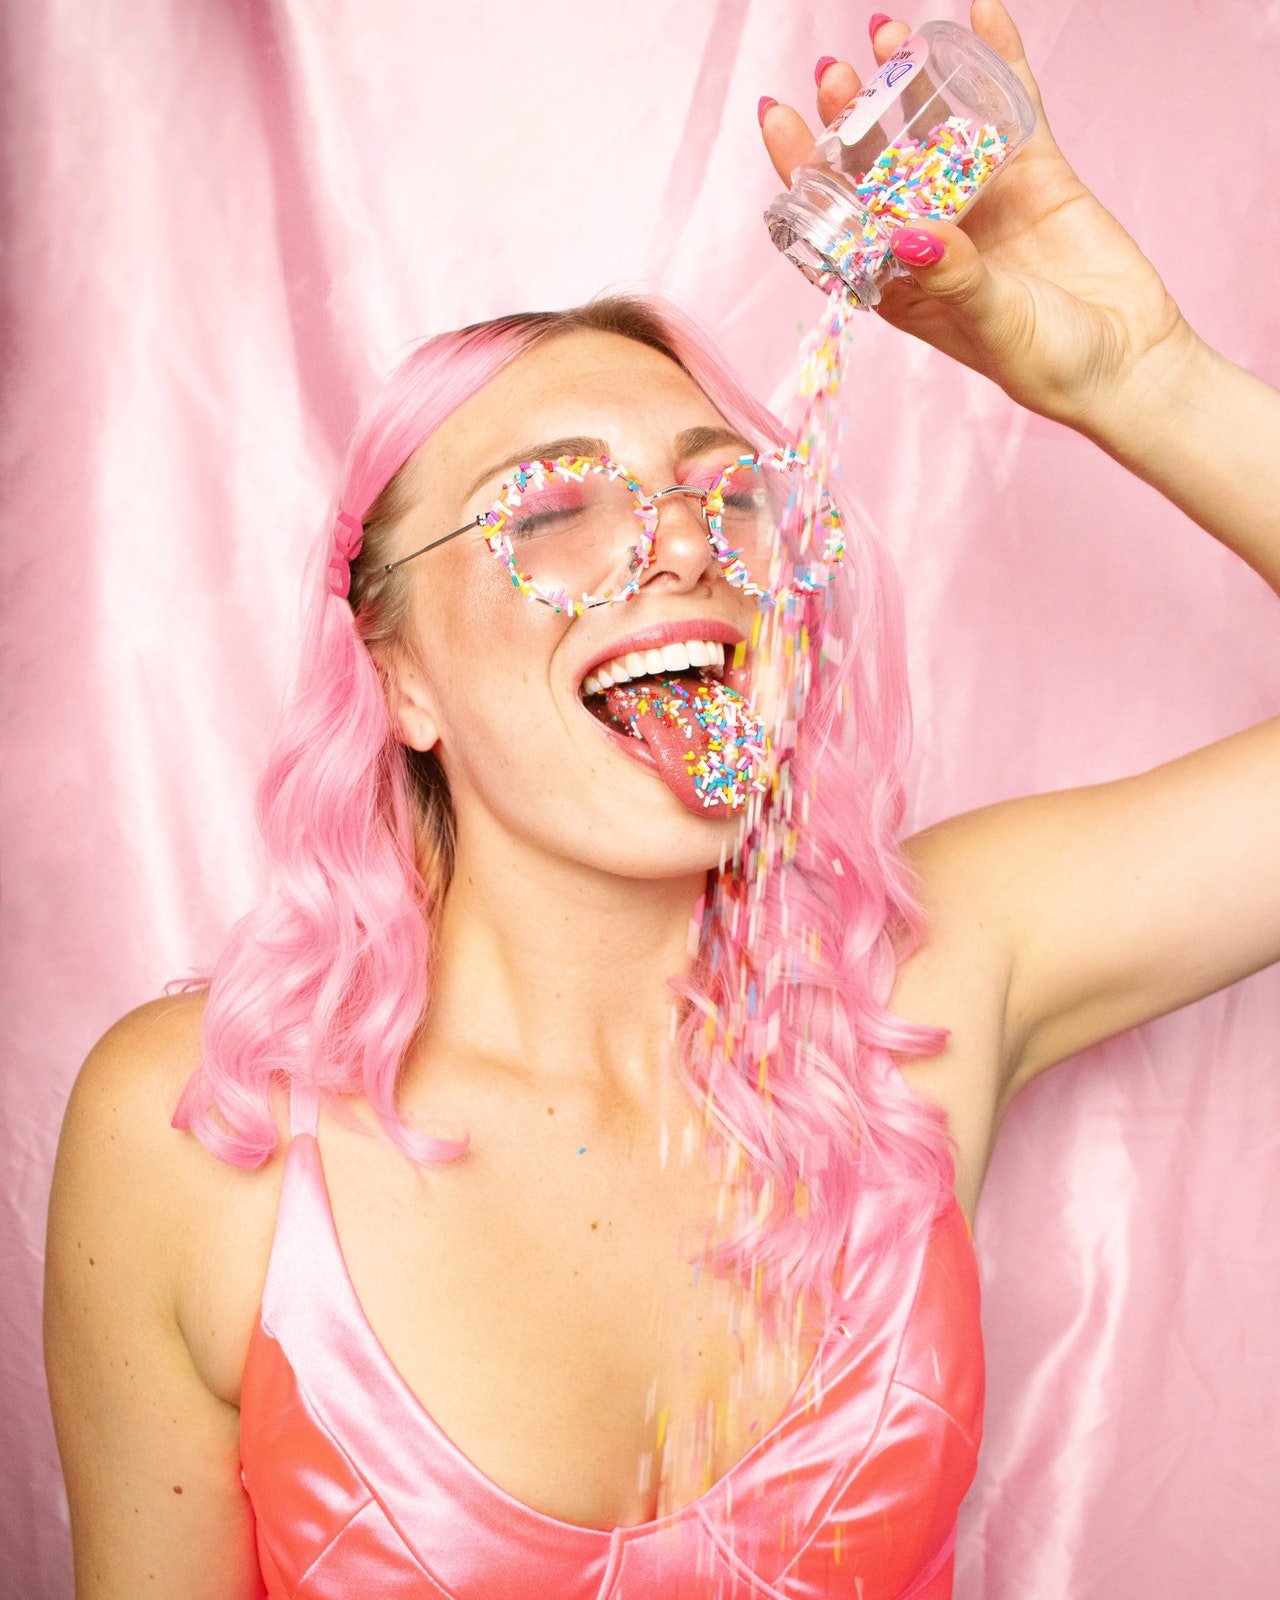 Mulher de roupa e cabelos cor de rosa comendo doces coloridos